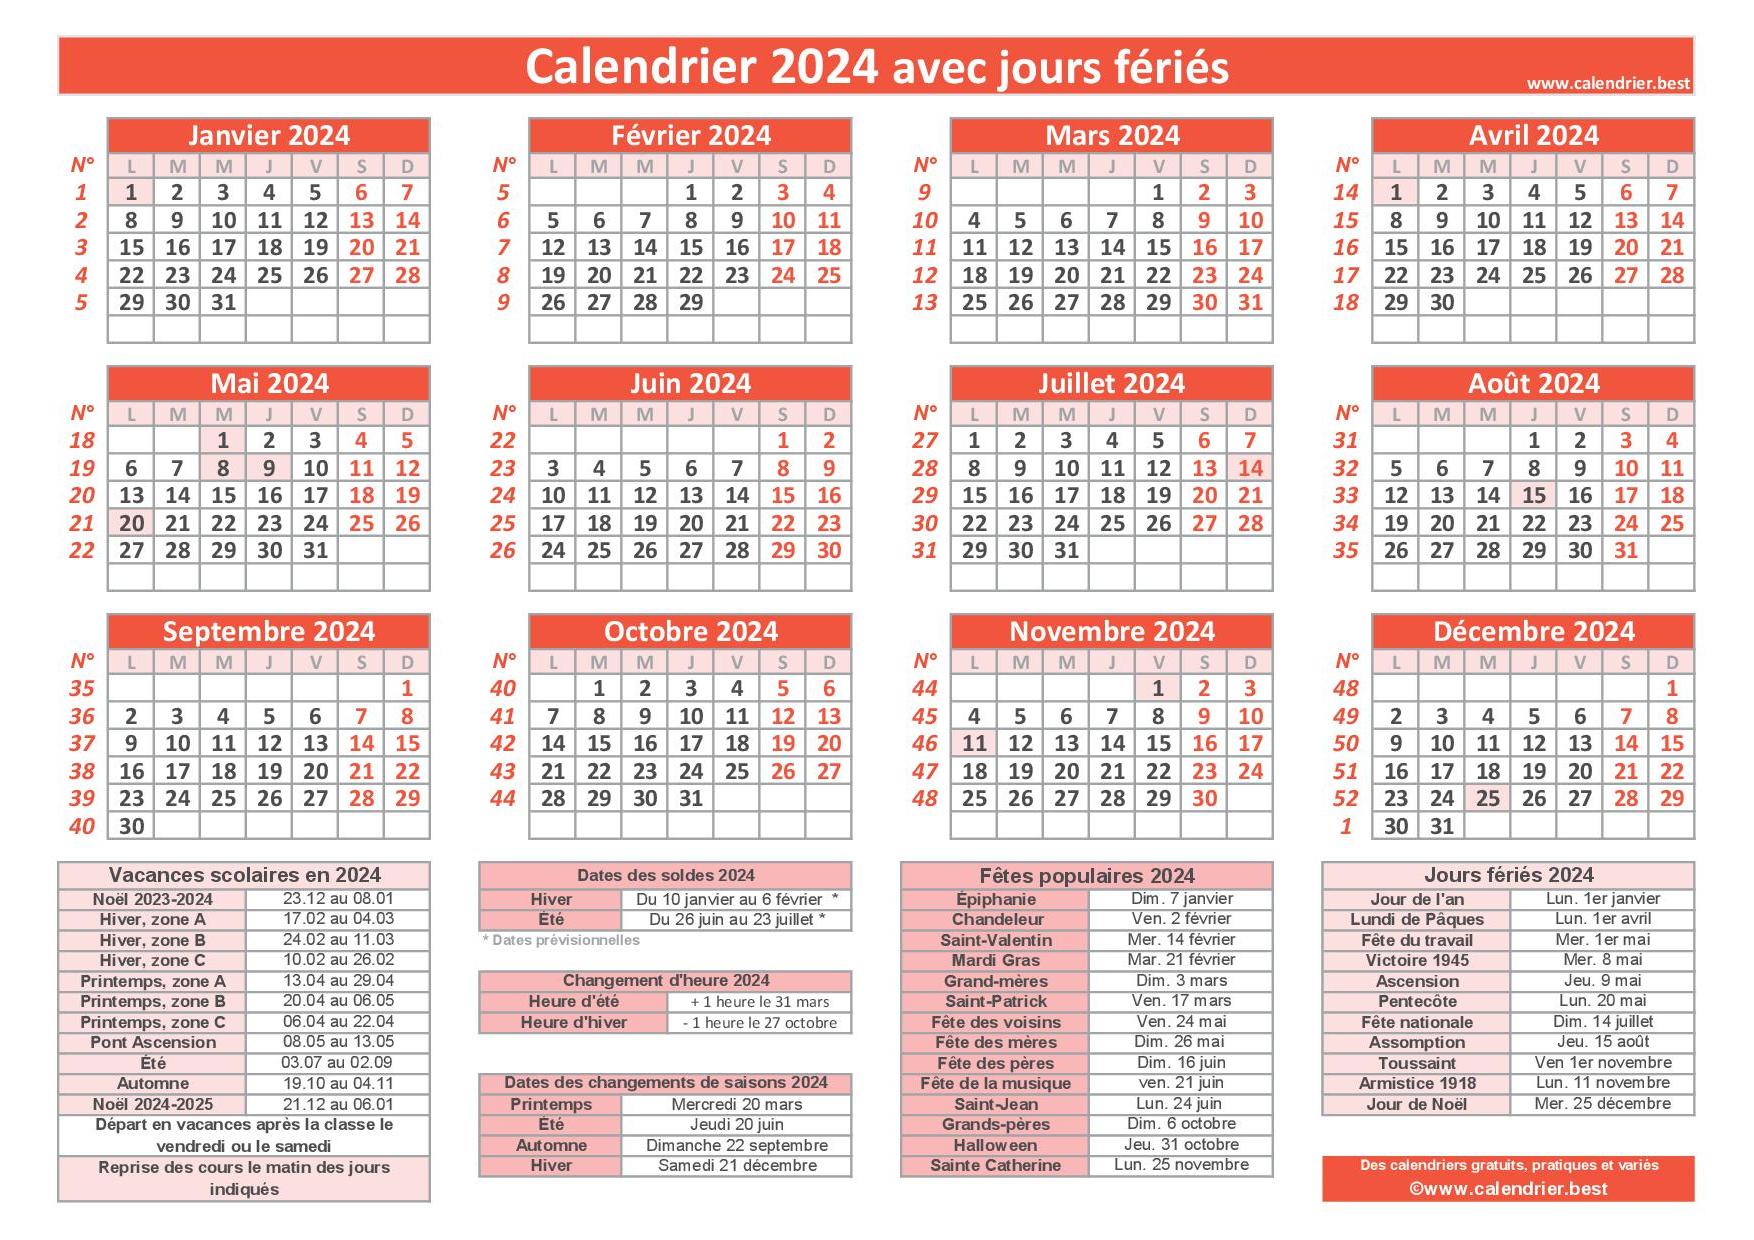 Grand calendrier 2024 Format A4